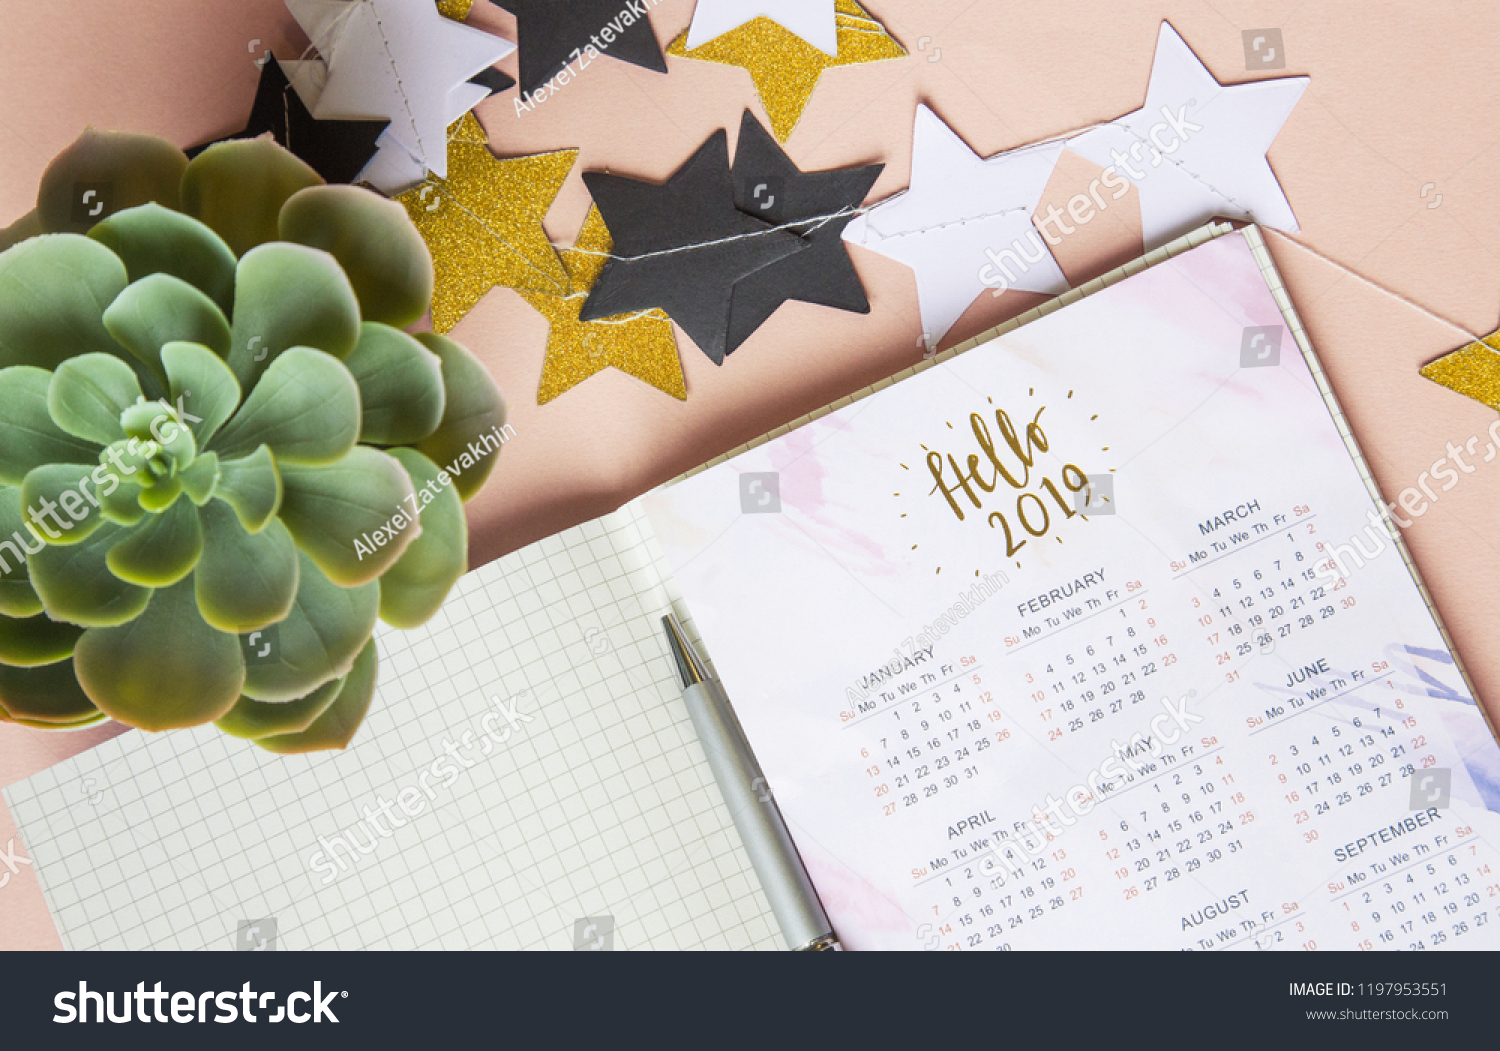 Calendar 2019 On Office Desk Notebook Stock Image Download Now